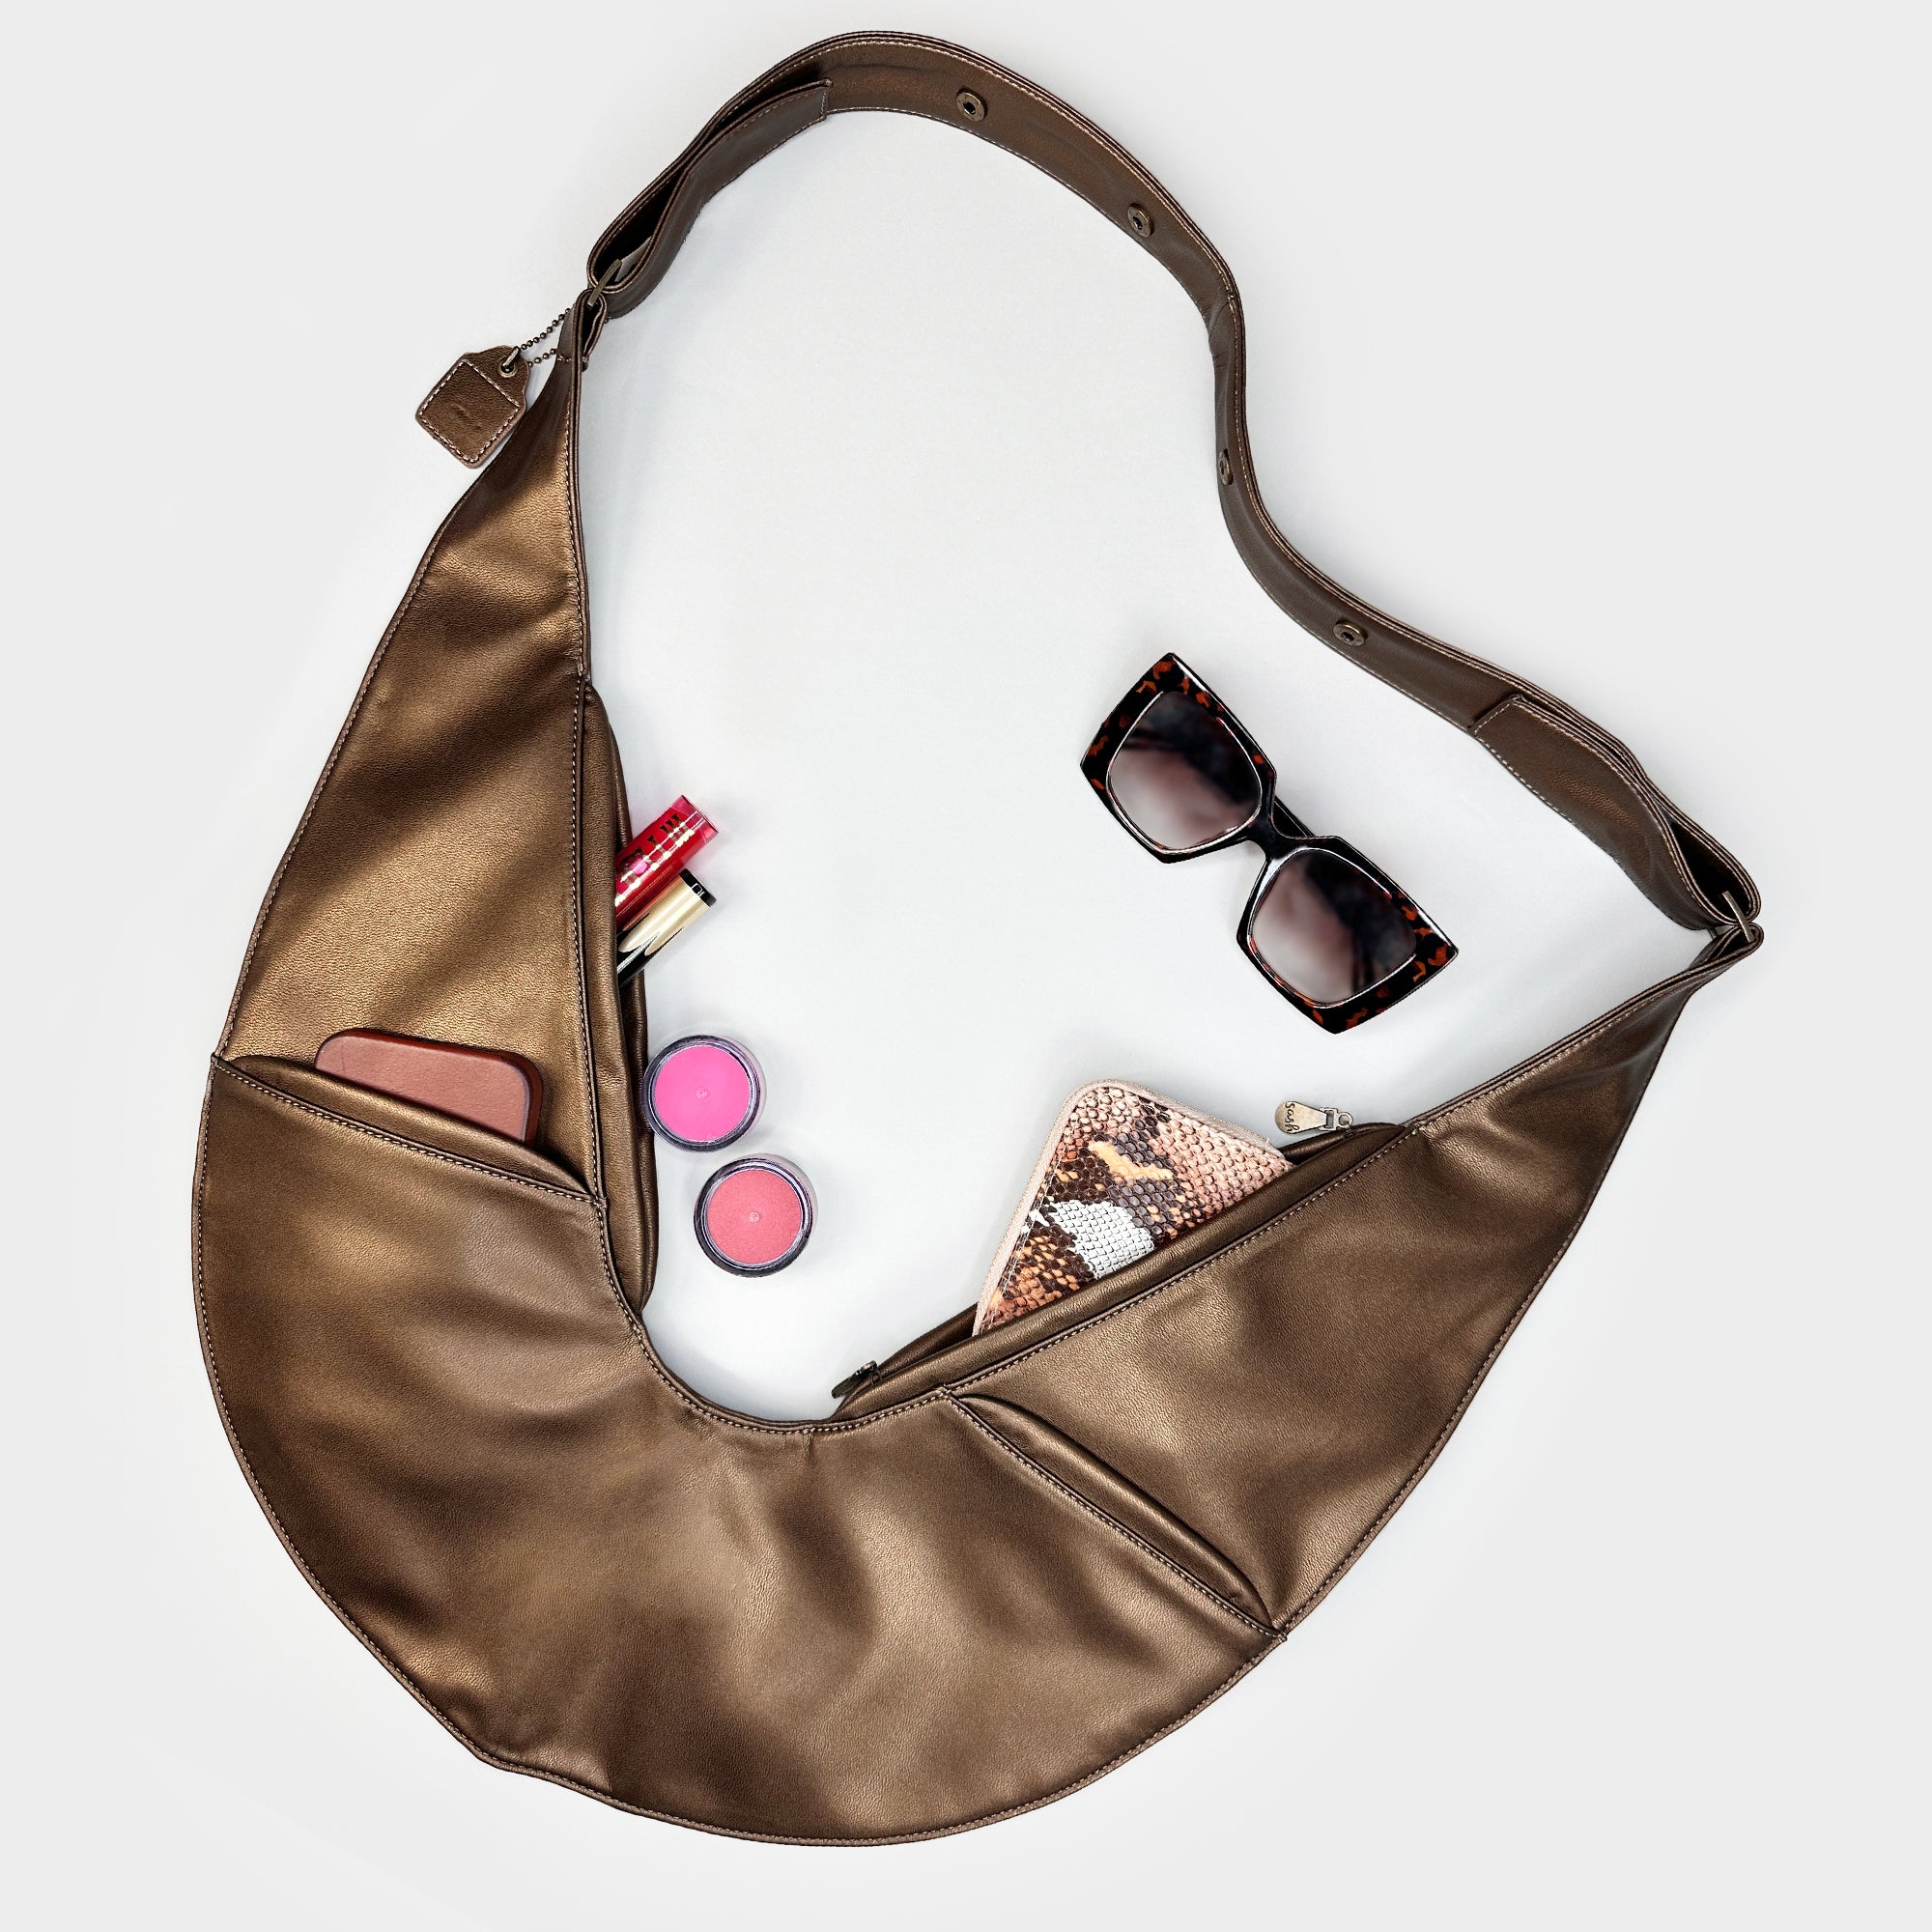 Nichole MacDonald's Sash Bag Is the Nomadic Woman's Favorite Accessory